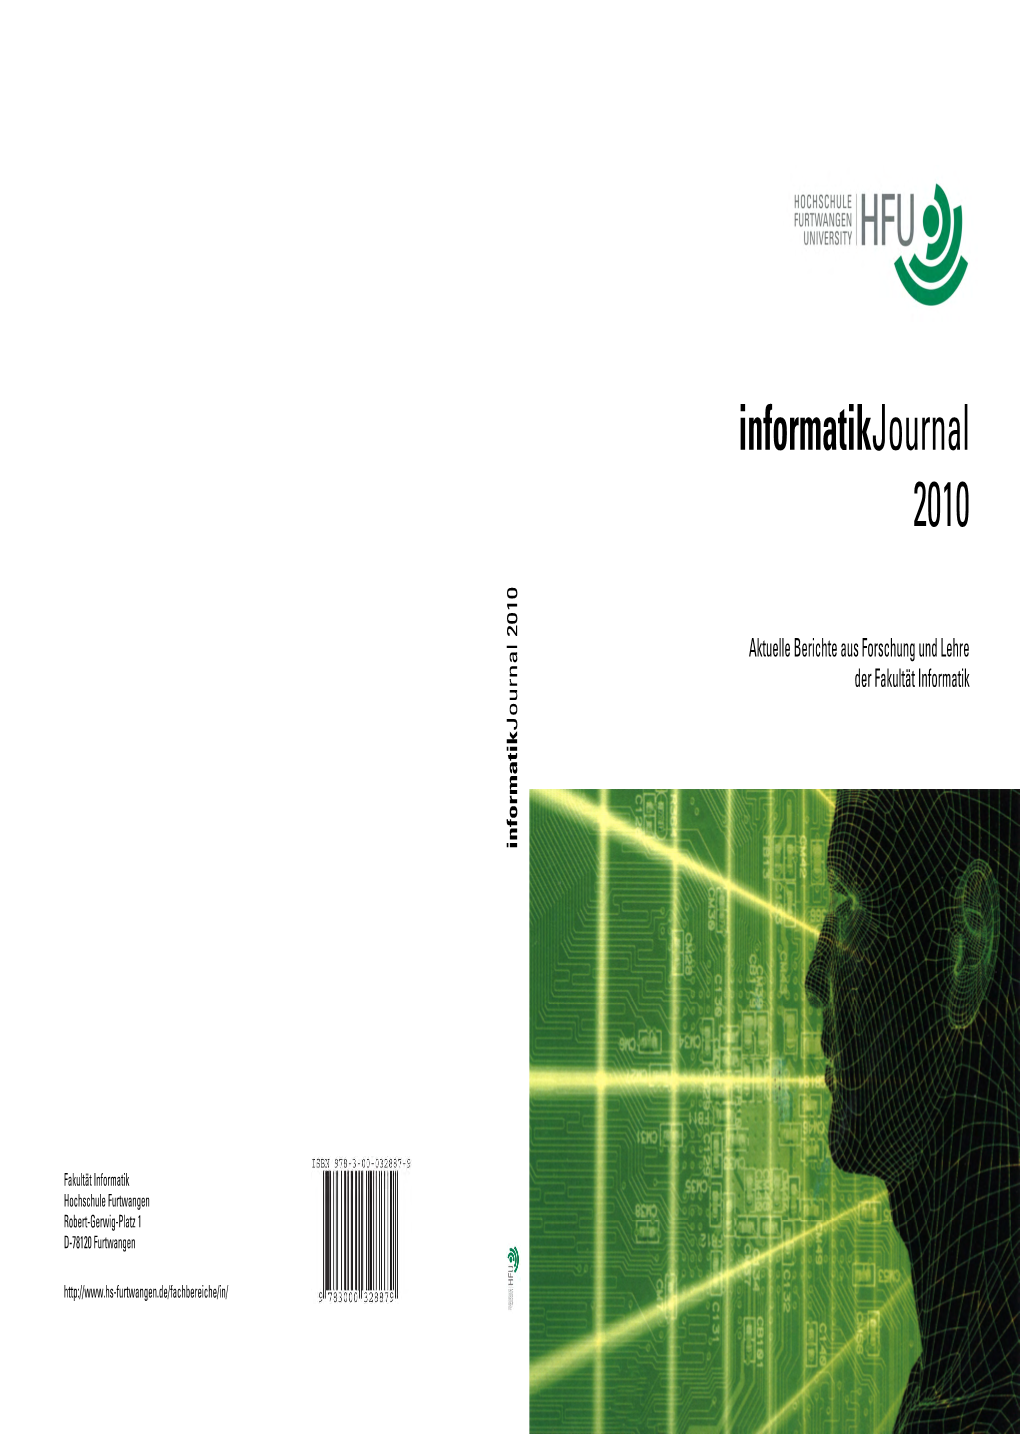 Informatikjournal 2010 Informatik Aktuelle Berichte Aus Forschung Und Lehre Aktuelle Berichteausforschung Der Fakultätinformatik Journal 2010